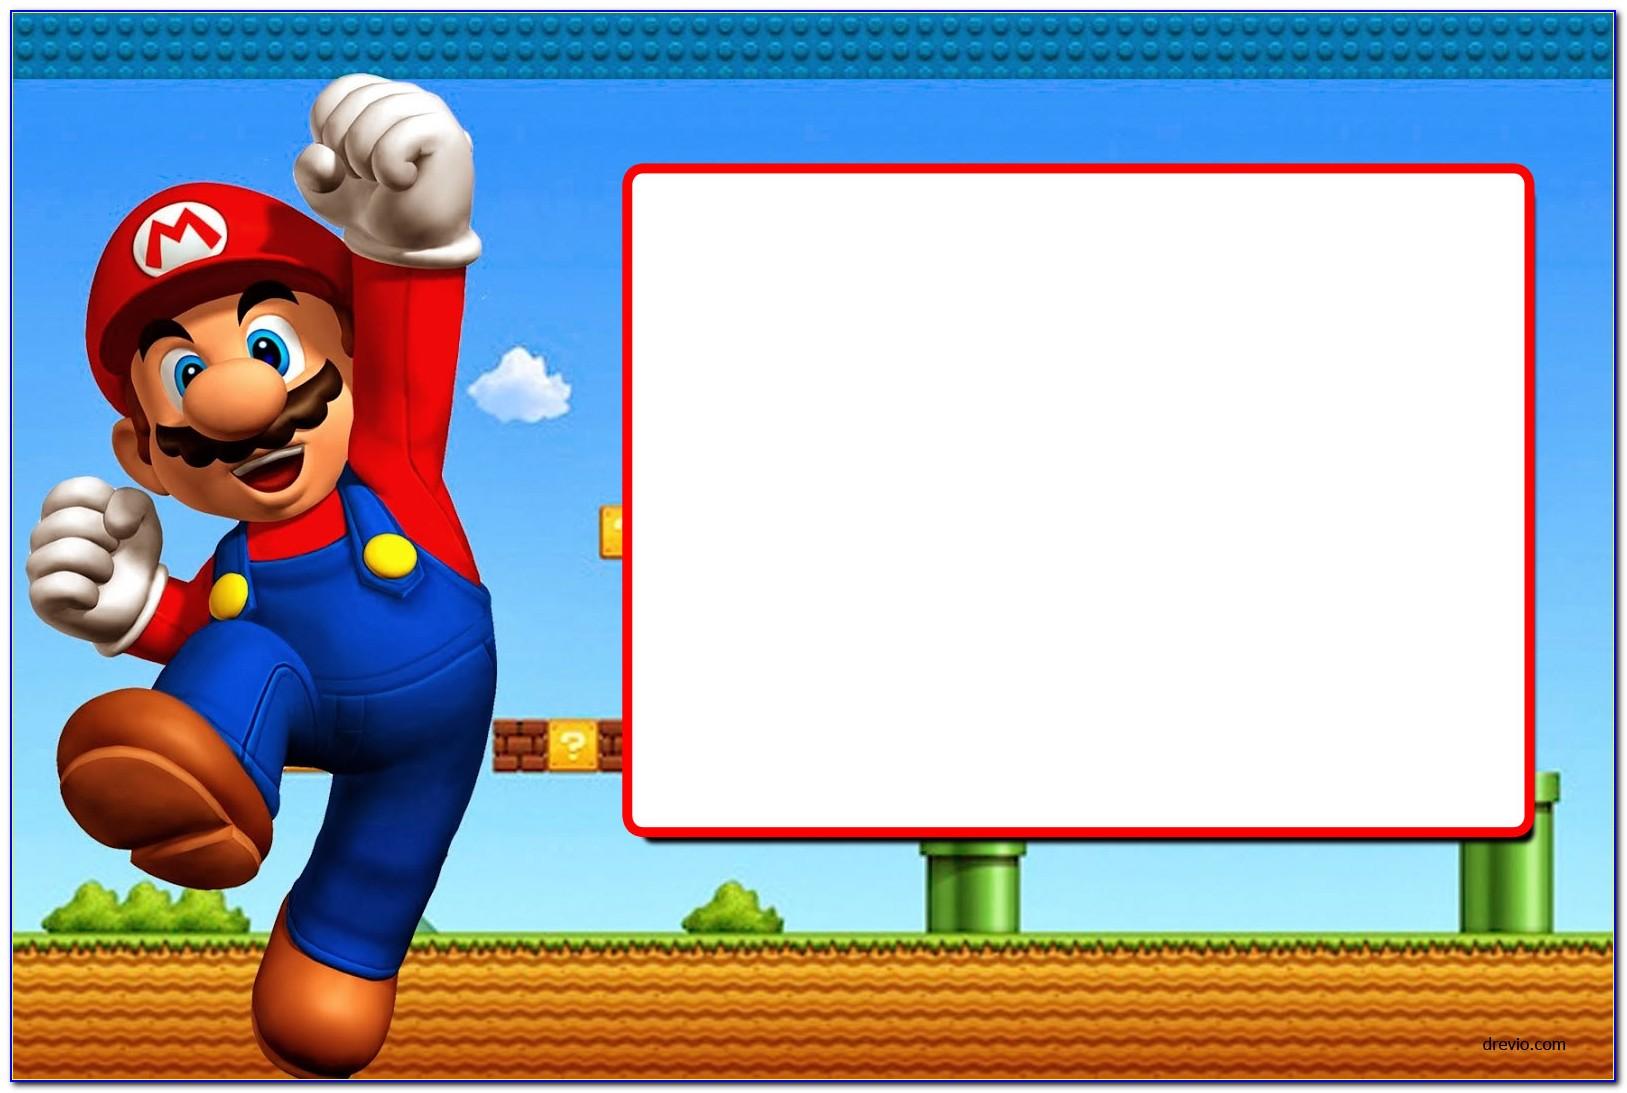 Editable Super Mario Invitations Template Free